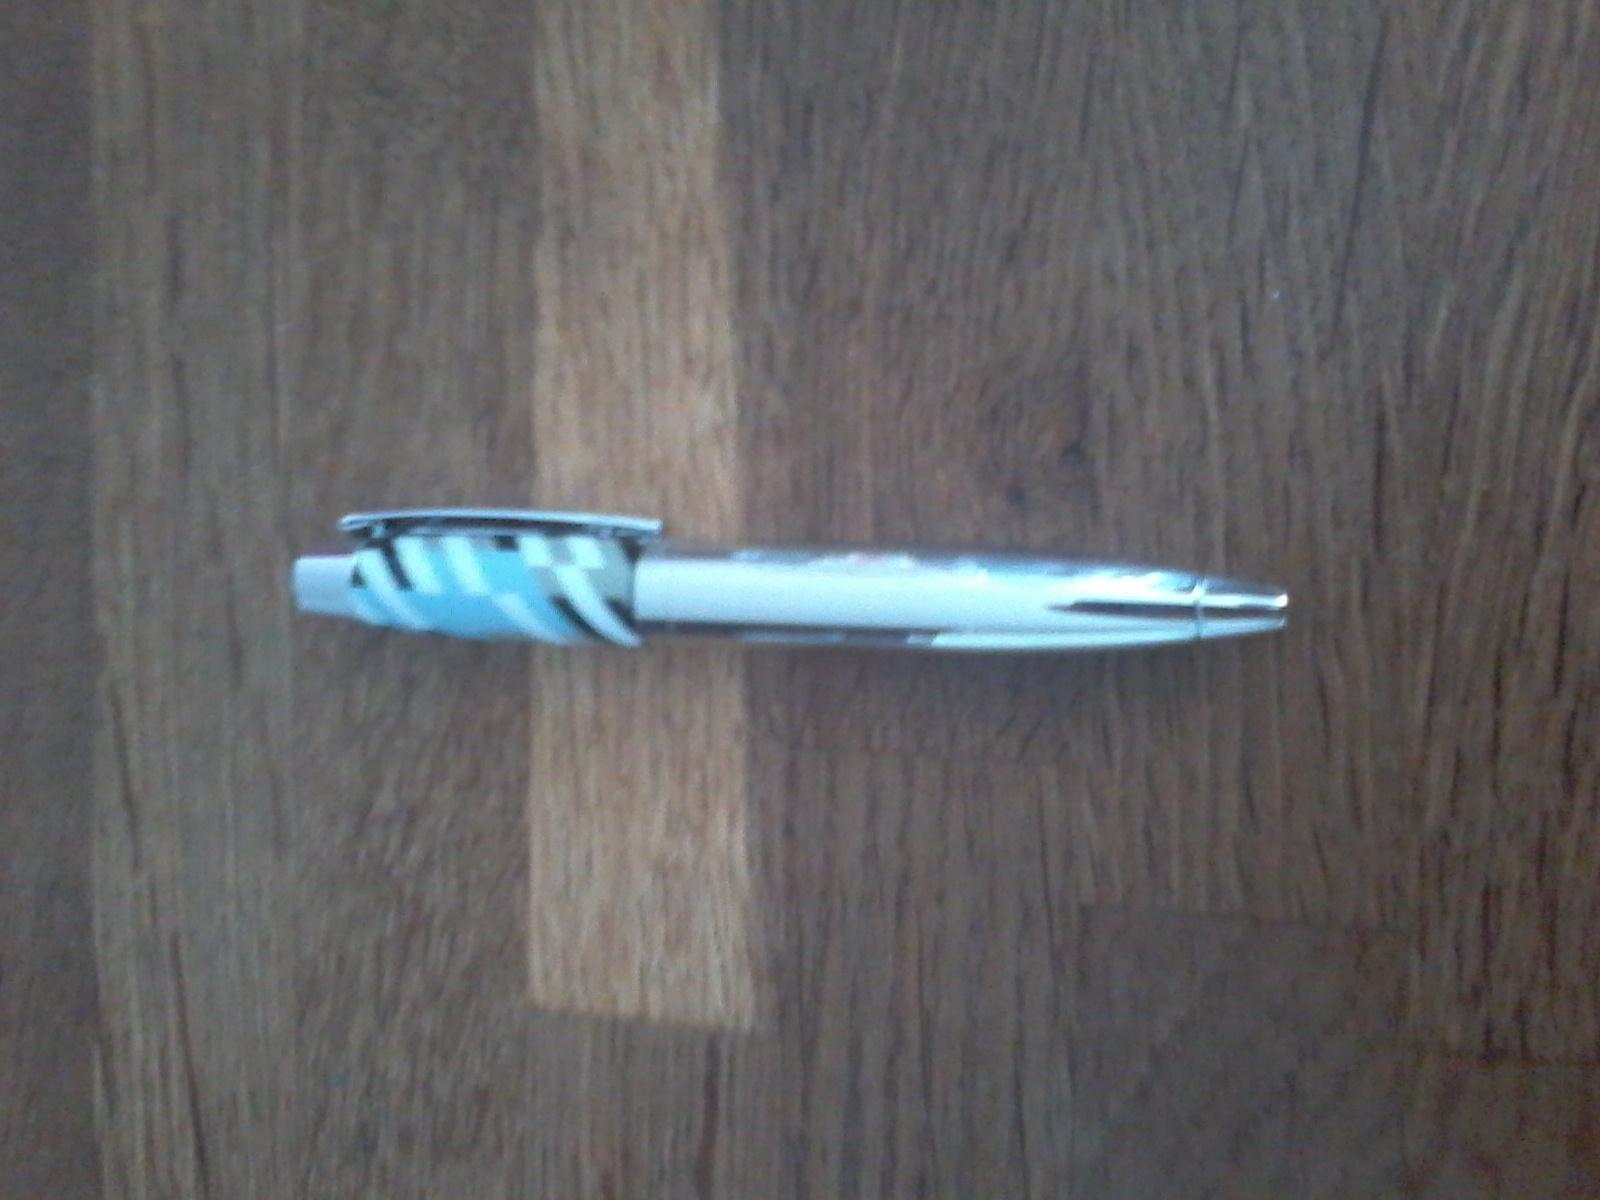 troc de troc stylo de petite taille image 0